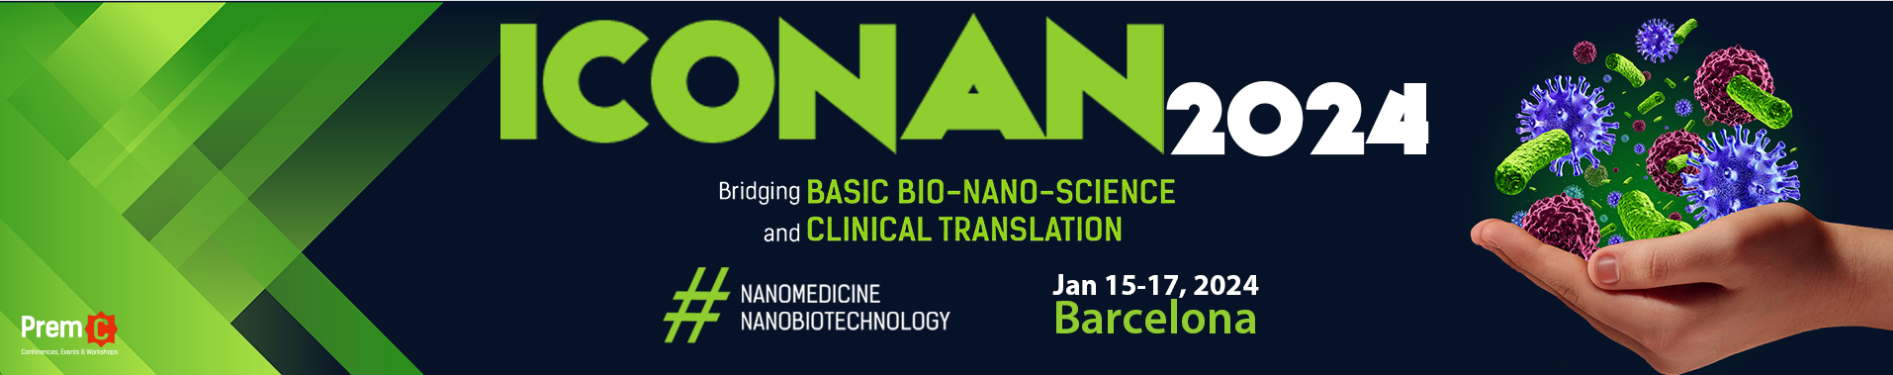 International Conference On Nanomedicine And Nanobiotechnology 